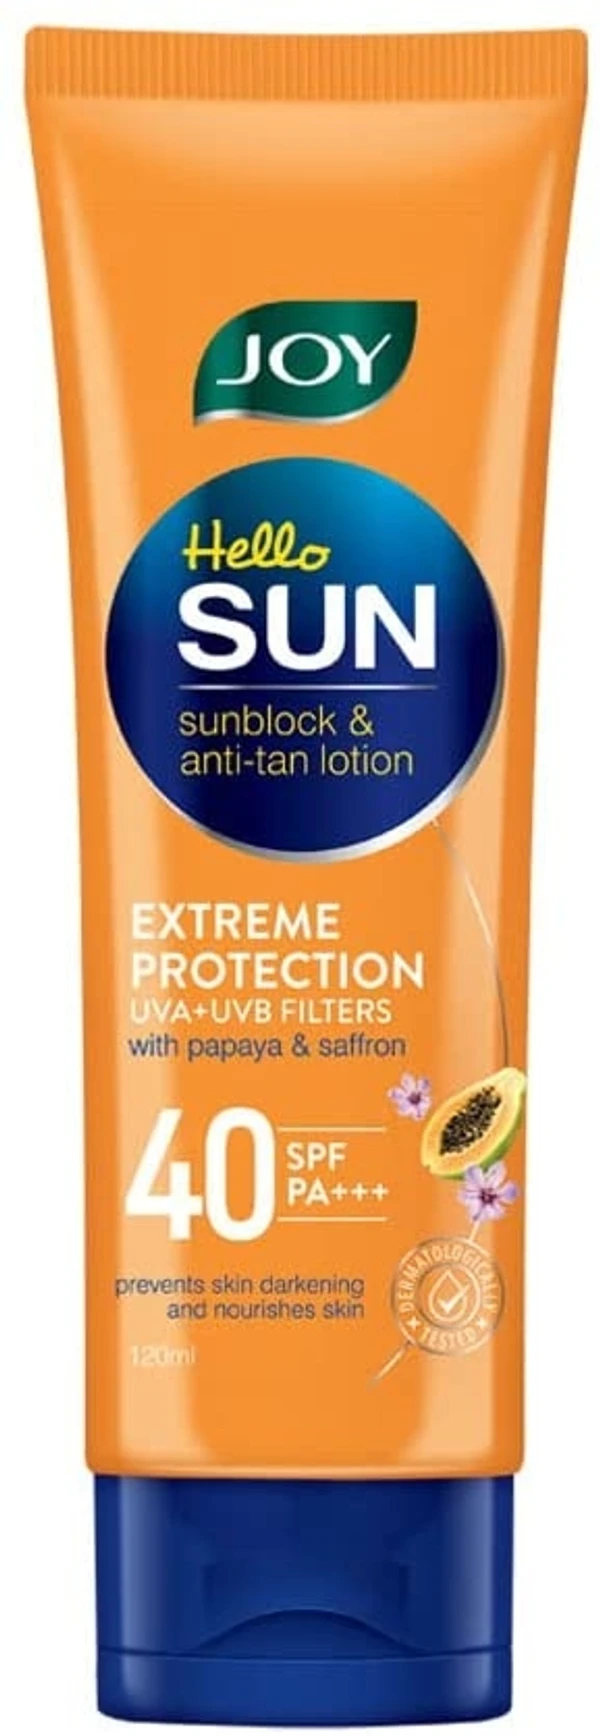 Joy Hello Sun Sunblock & Anti Tan Lotion Sunscreen SPF 40 PA+++,120ml